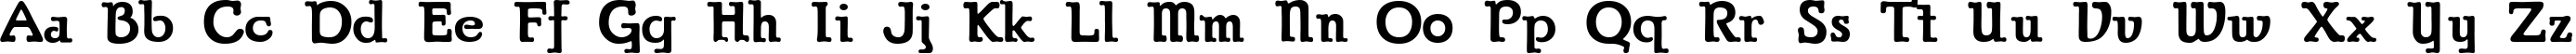 Пример написания английского алфавита шрифтом Parsons Heavy